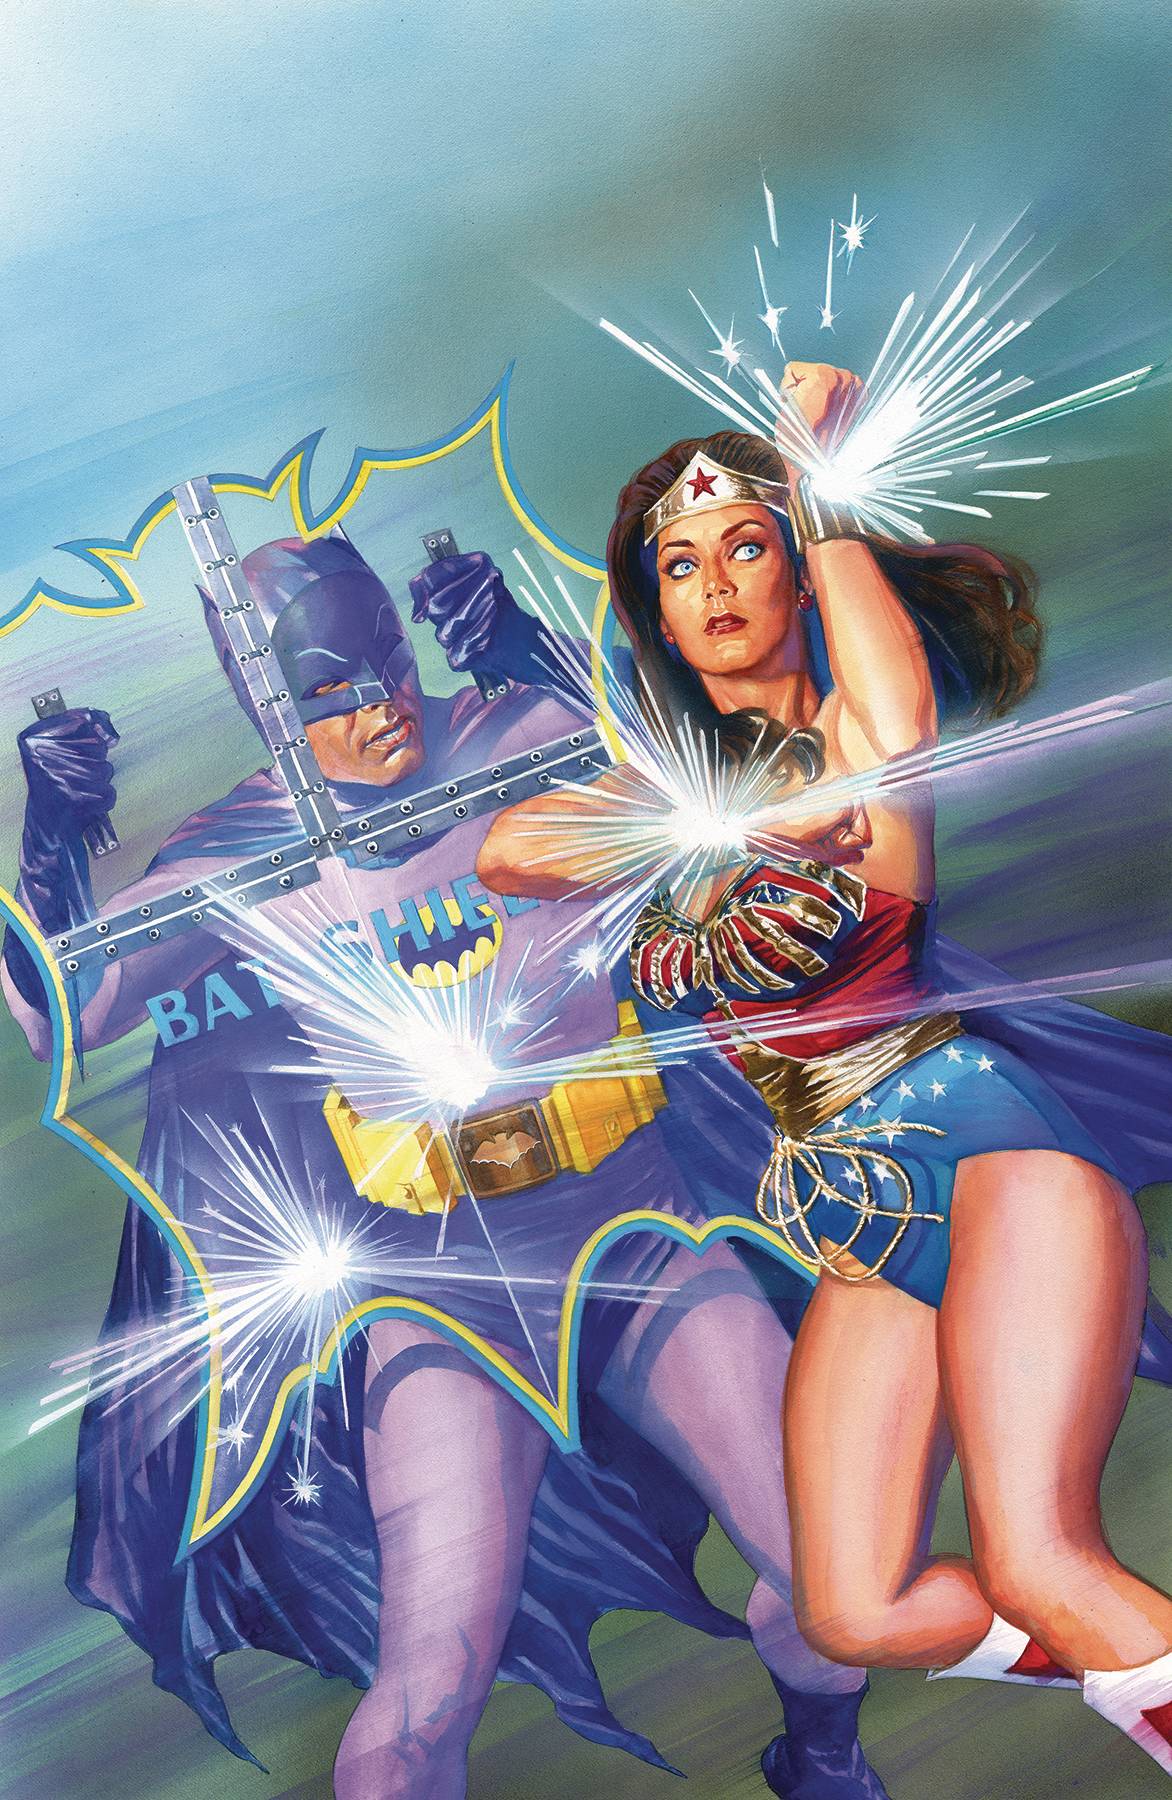 Batman 66 Meets Wonder Woman 77 Hardcover